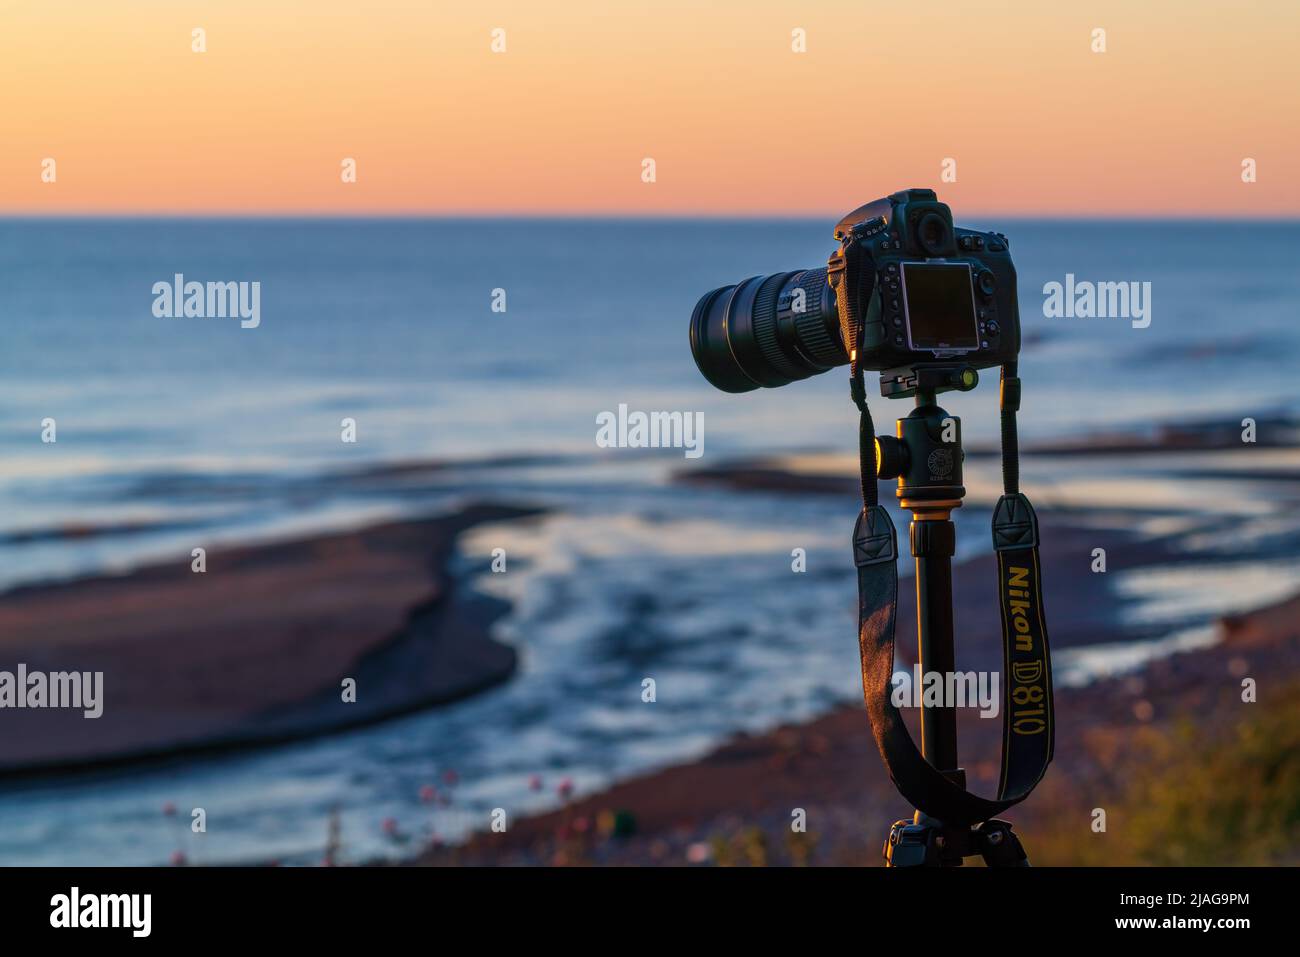 Nikon camera on a tripod by the sea Stock Photo